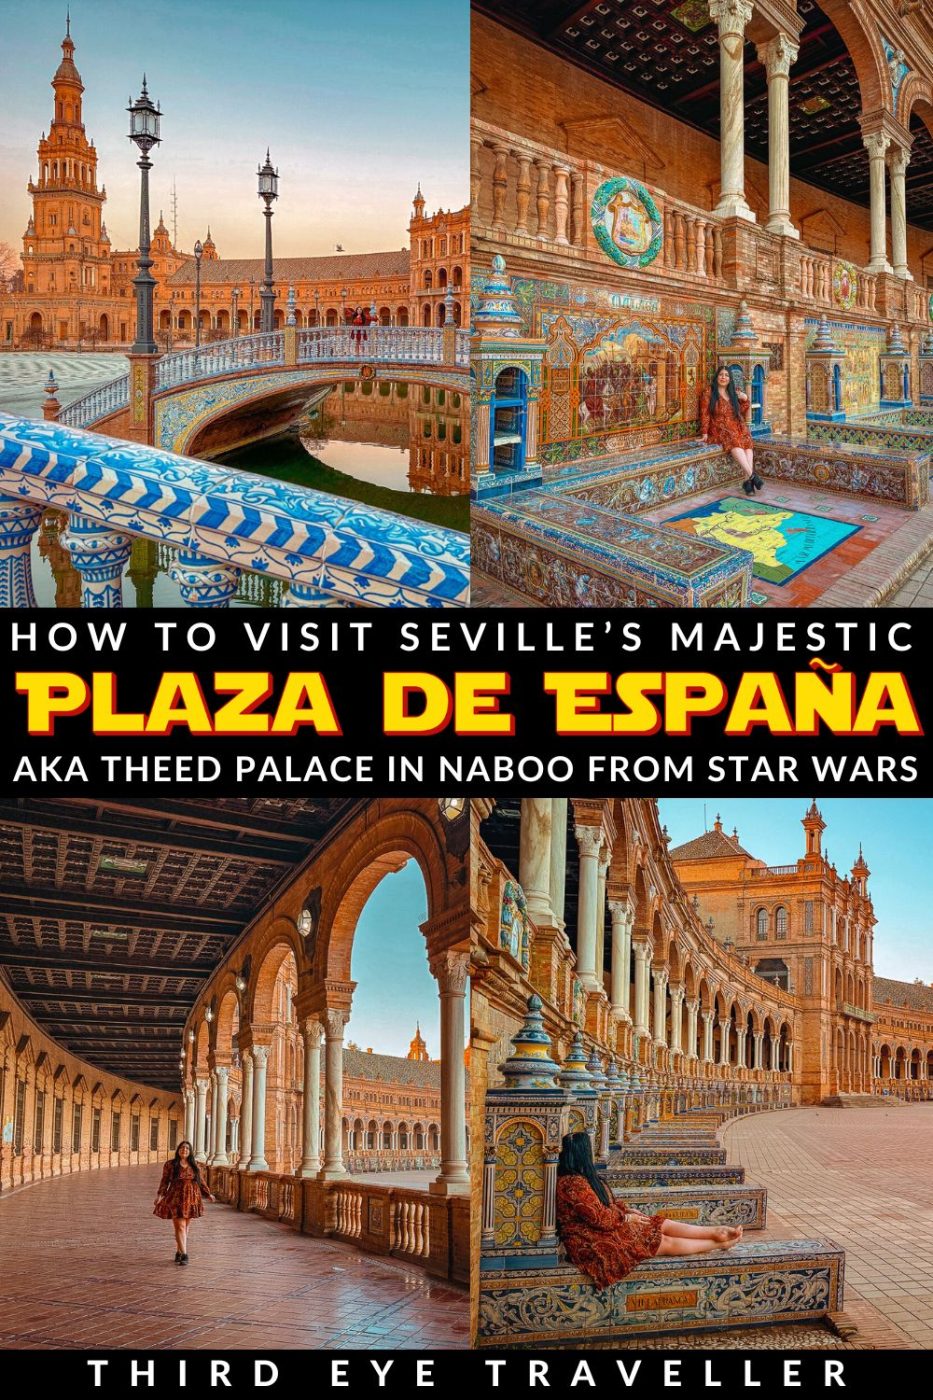 Plaza de Espana Star Wars filming location Naboo